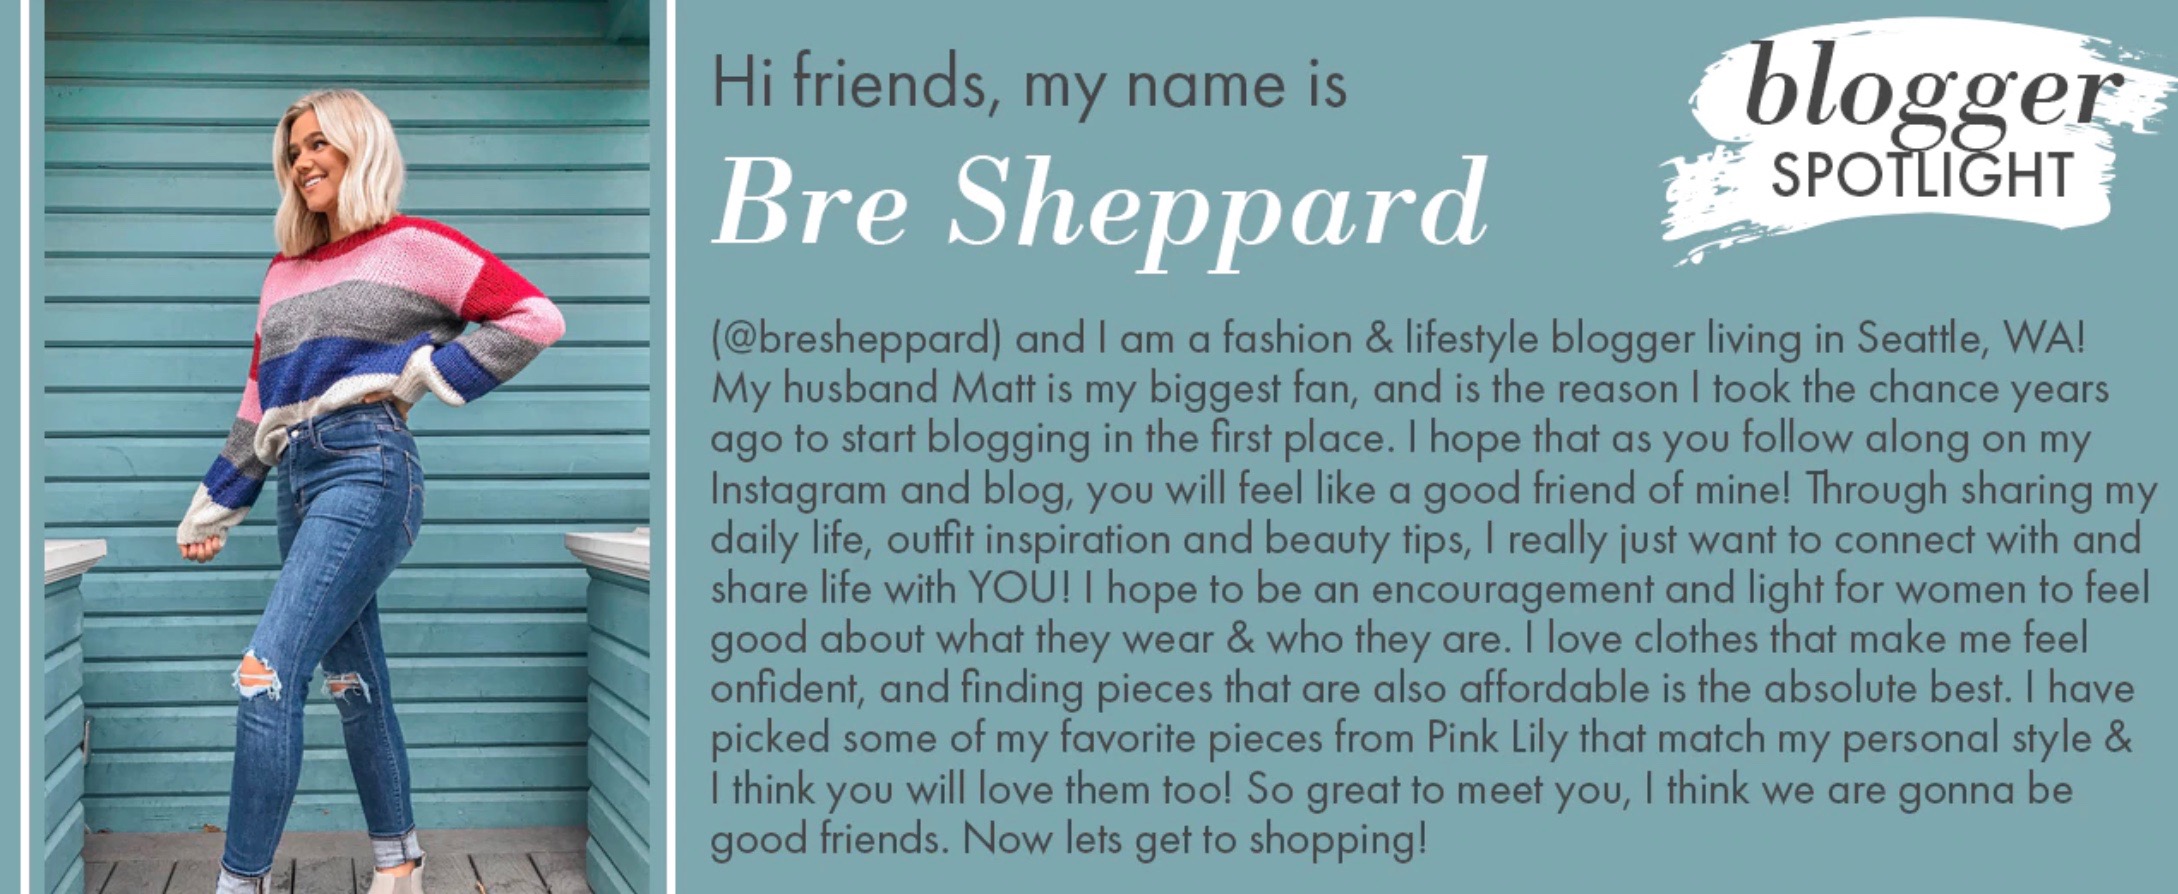 Blog Post - Bre Sheppard